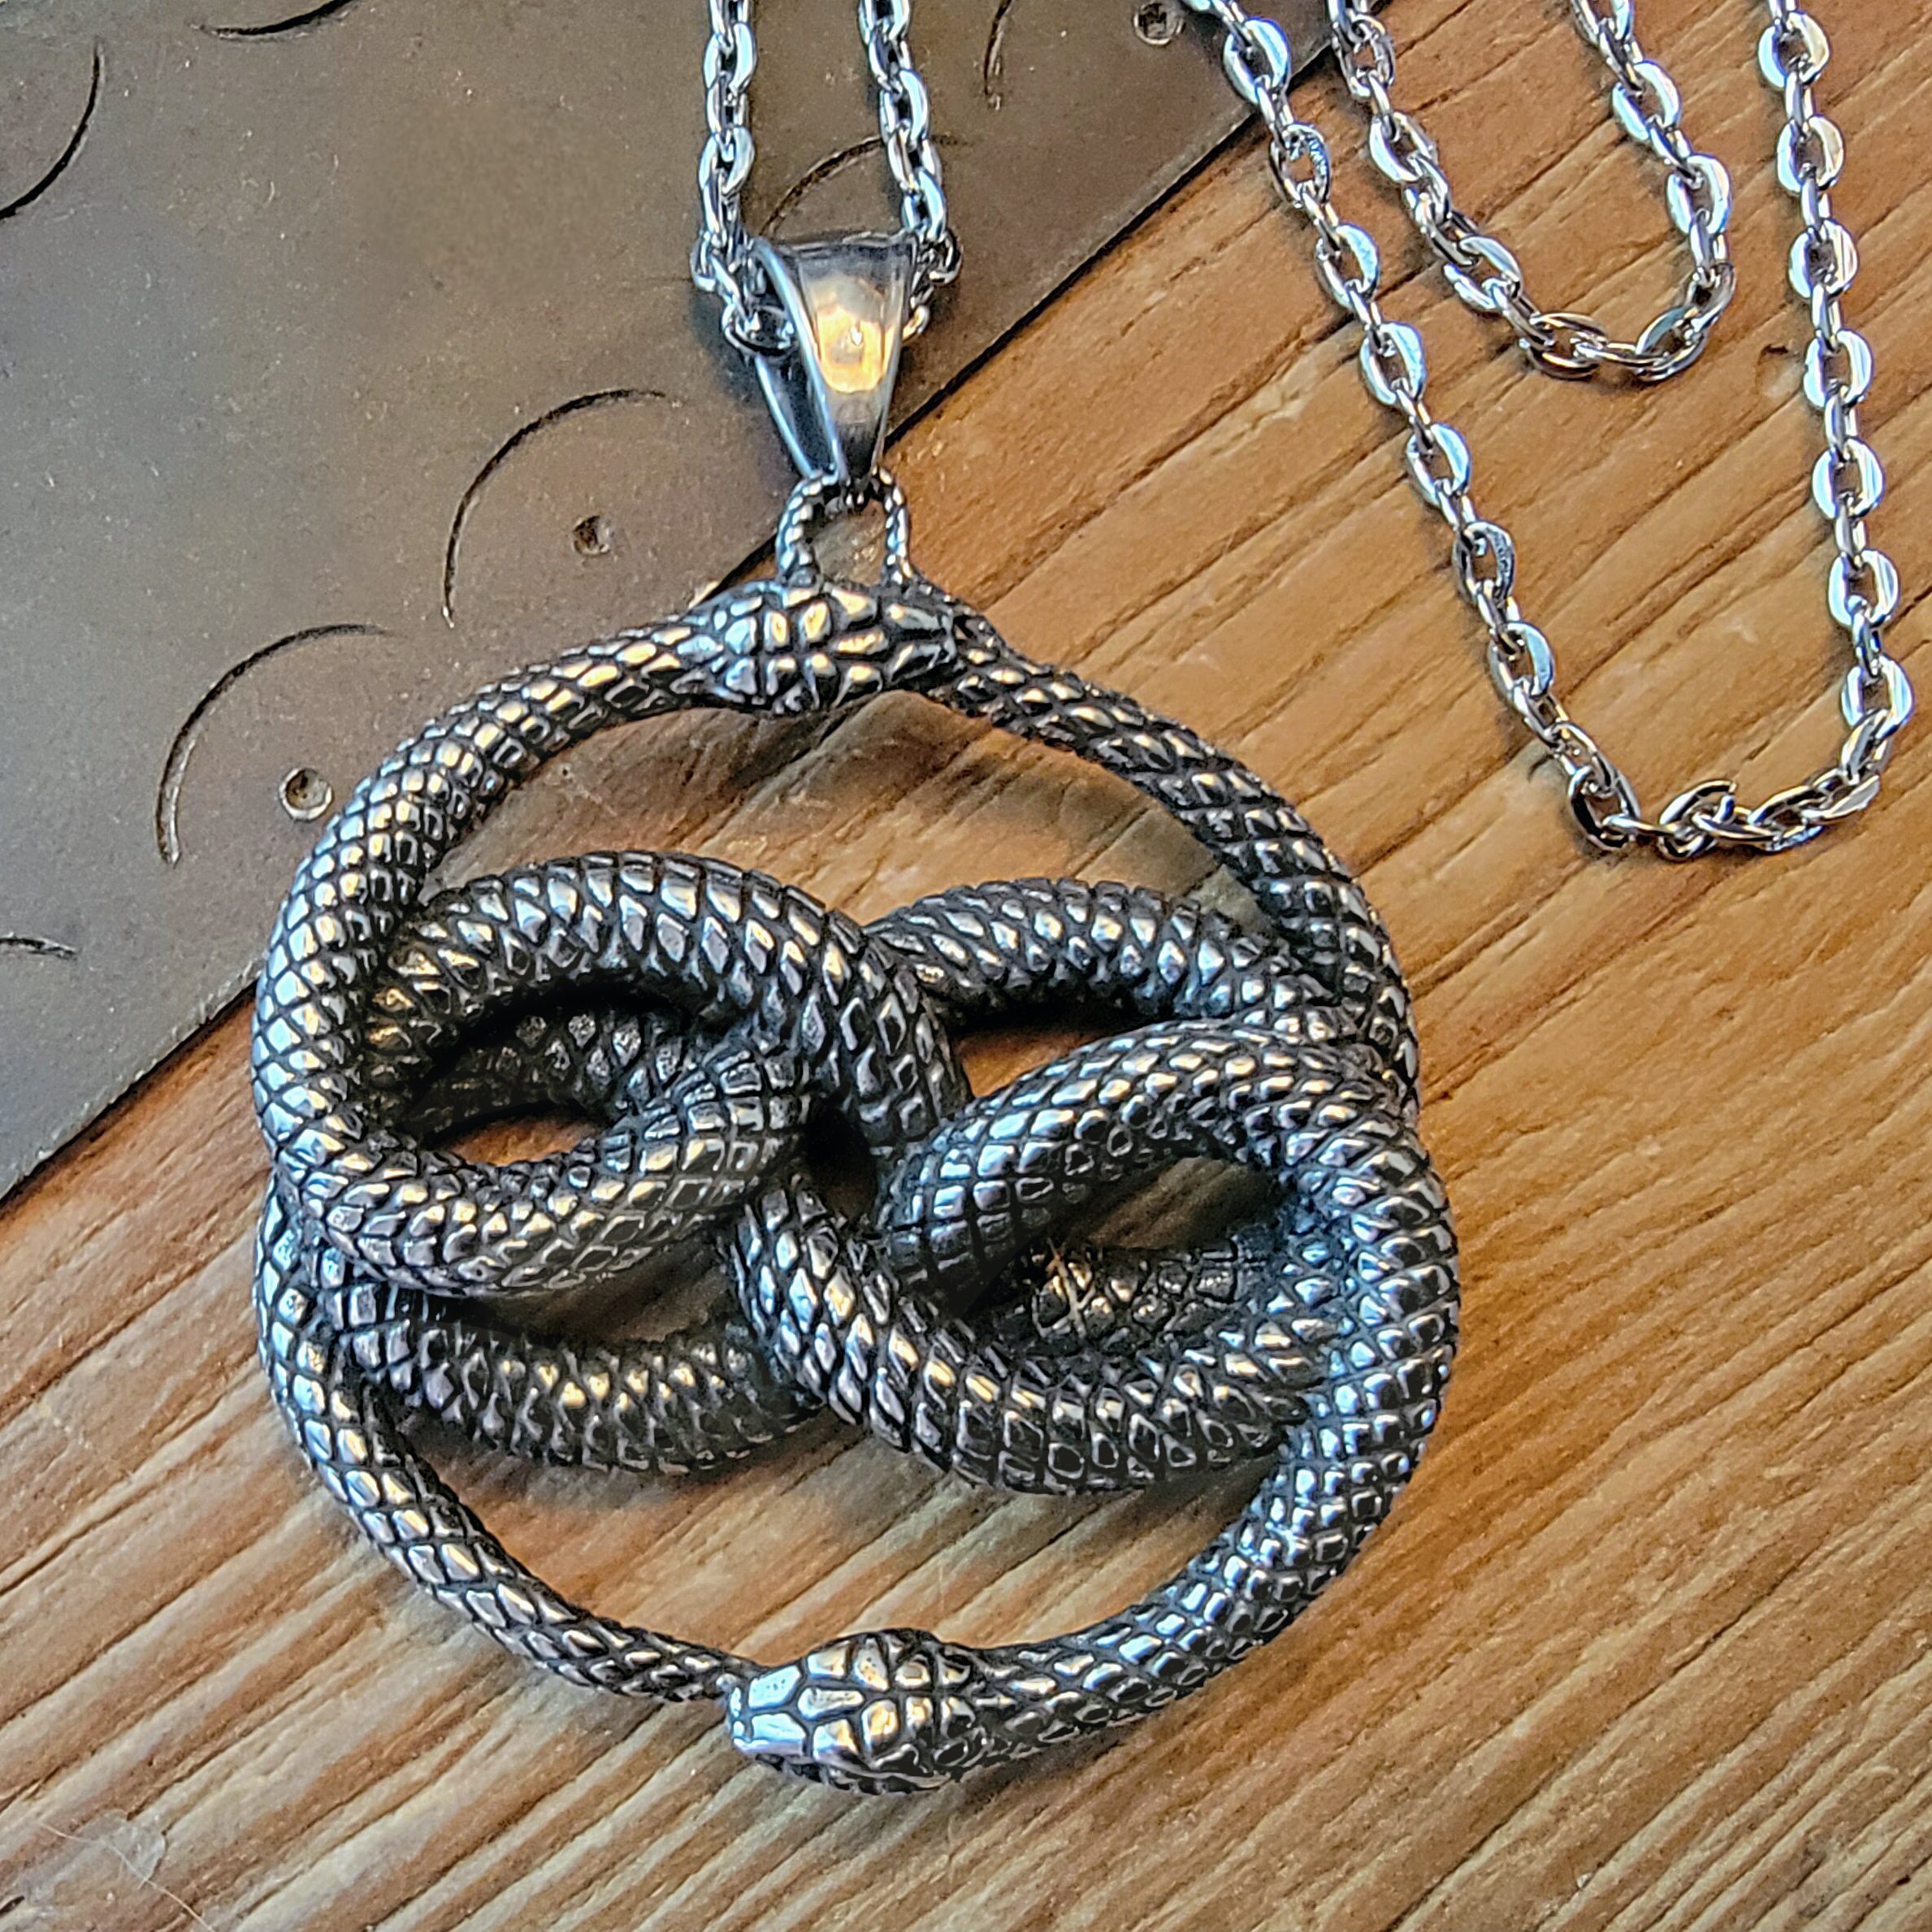 Ouroboros necklace Neverending Story pendant - by Black Wolf Pendants